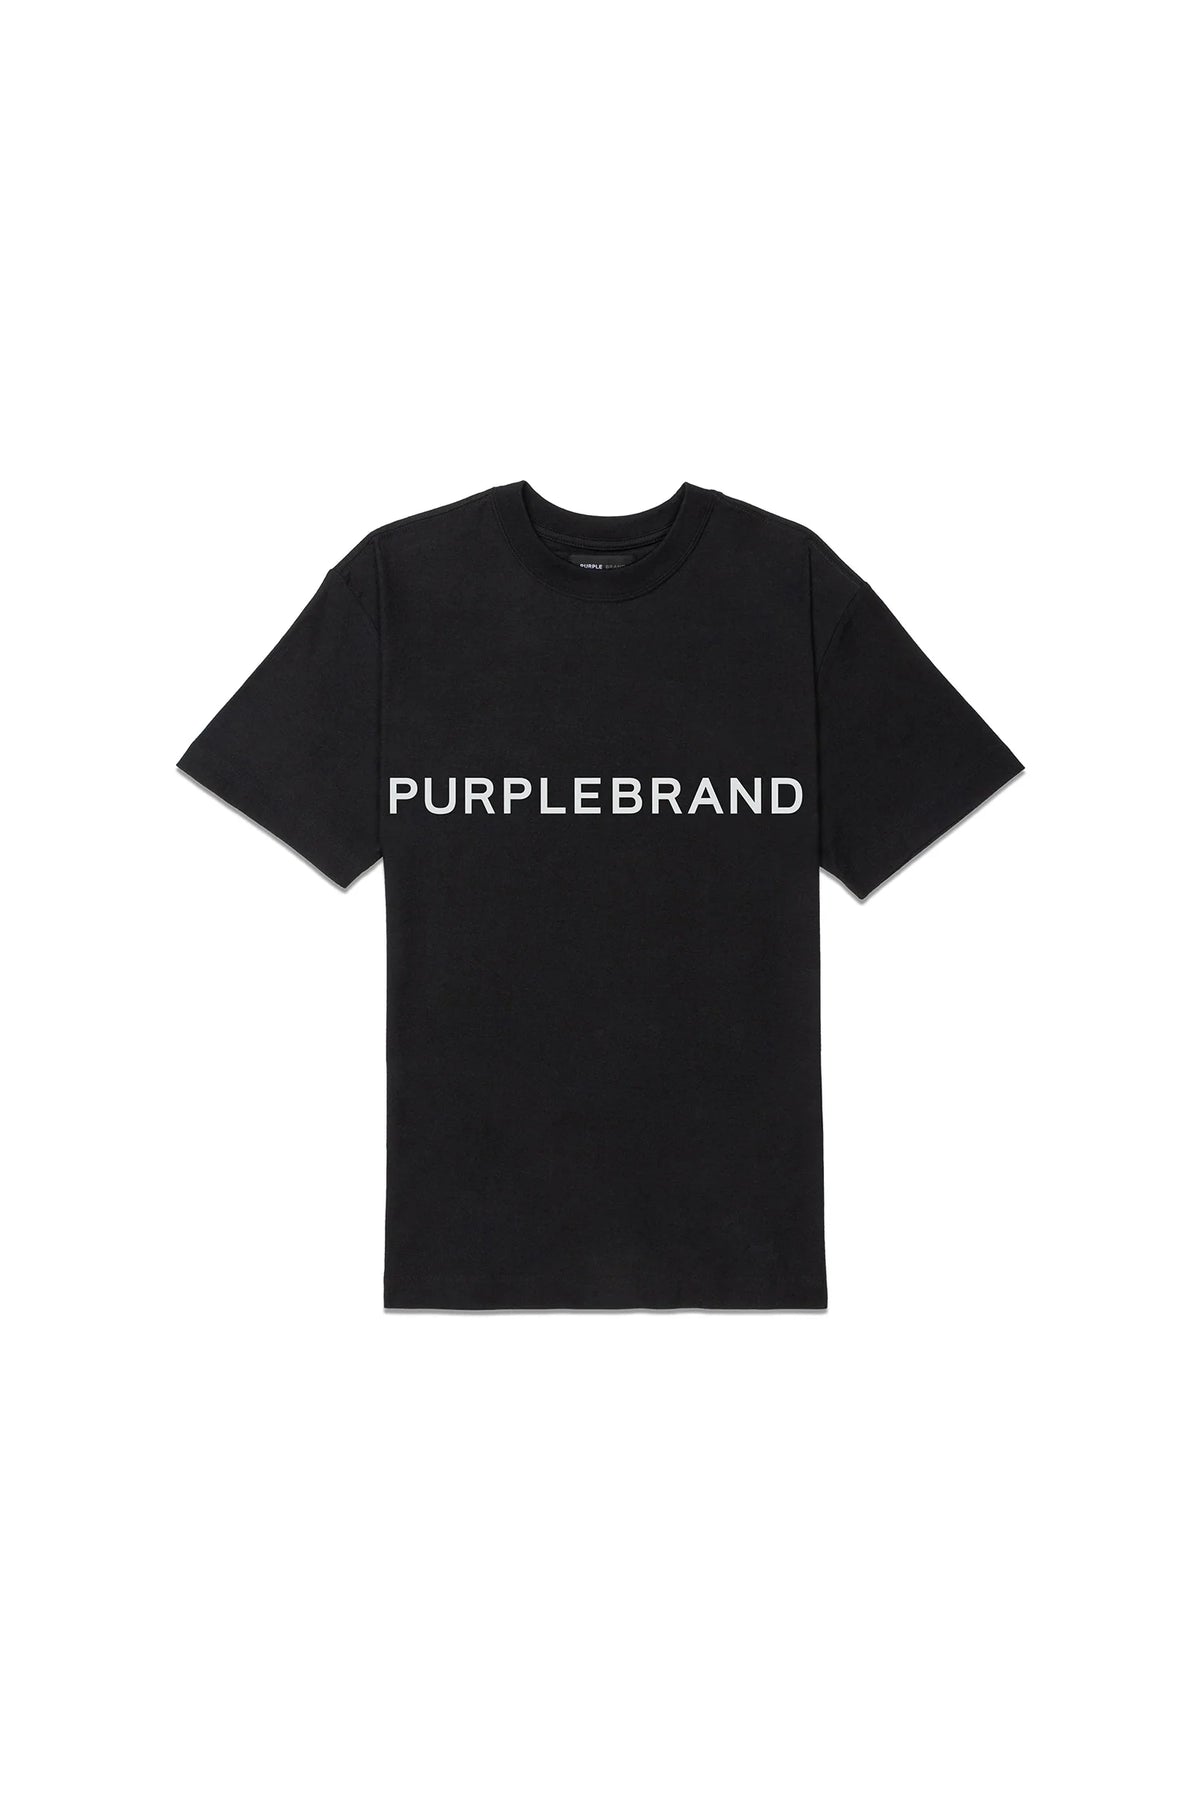 PURPLE BRAND P104 Textured Wordmark T-Shirt